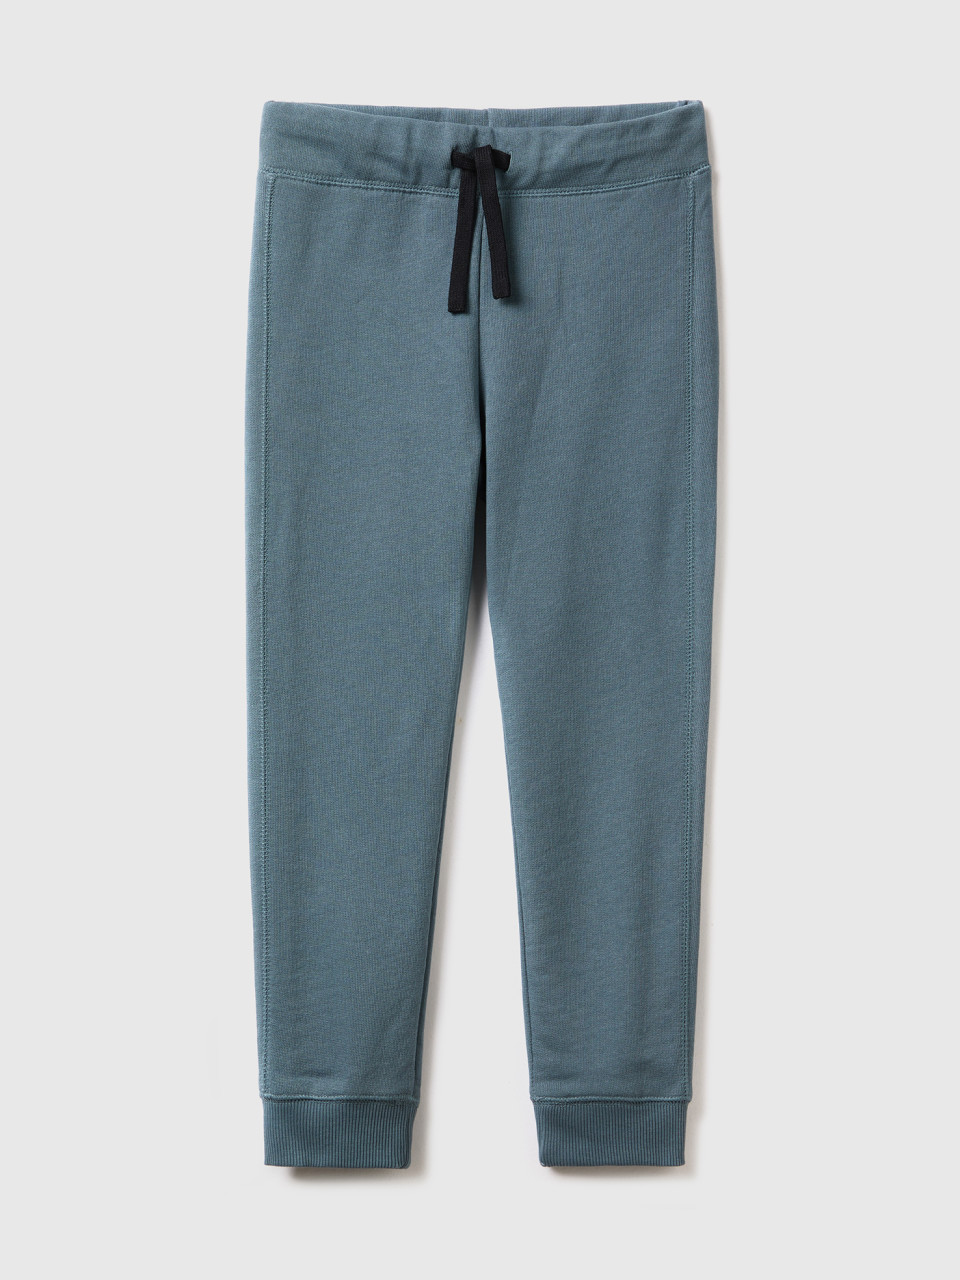 Benetton, 100% Cotton Sweatpants, Dark Gray, Kids